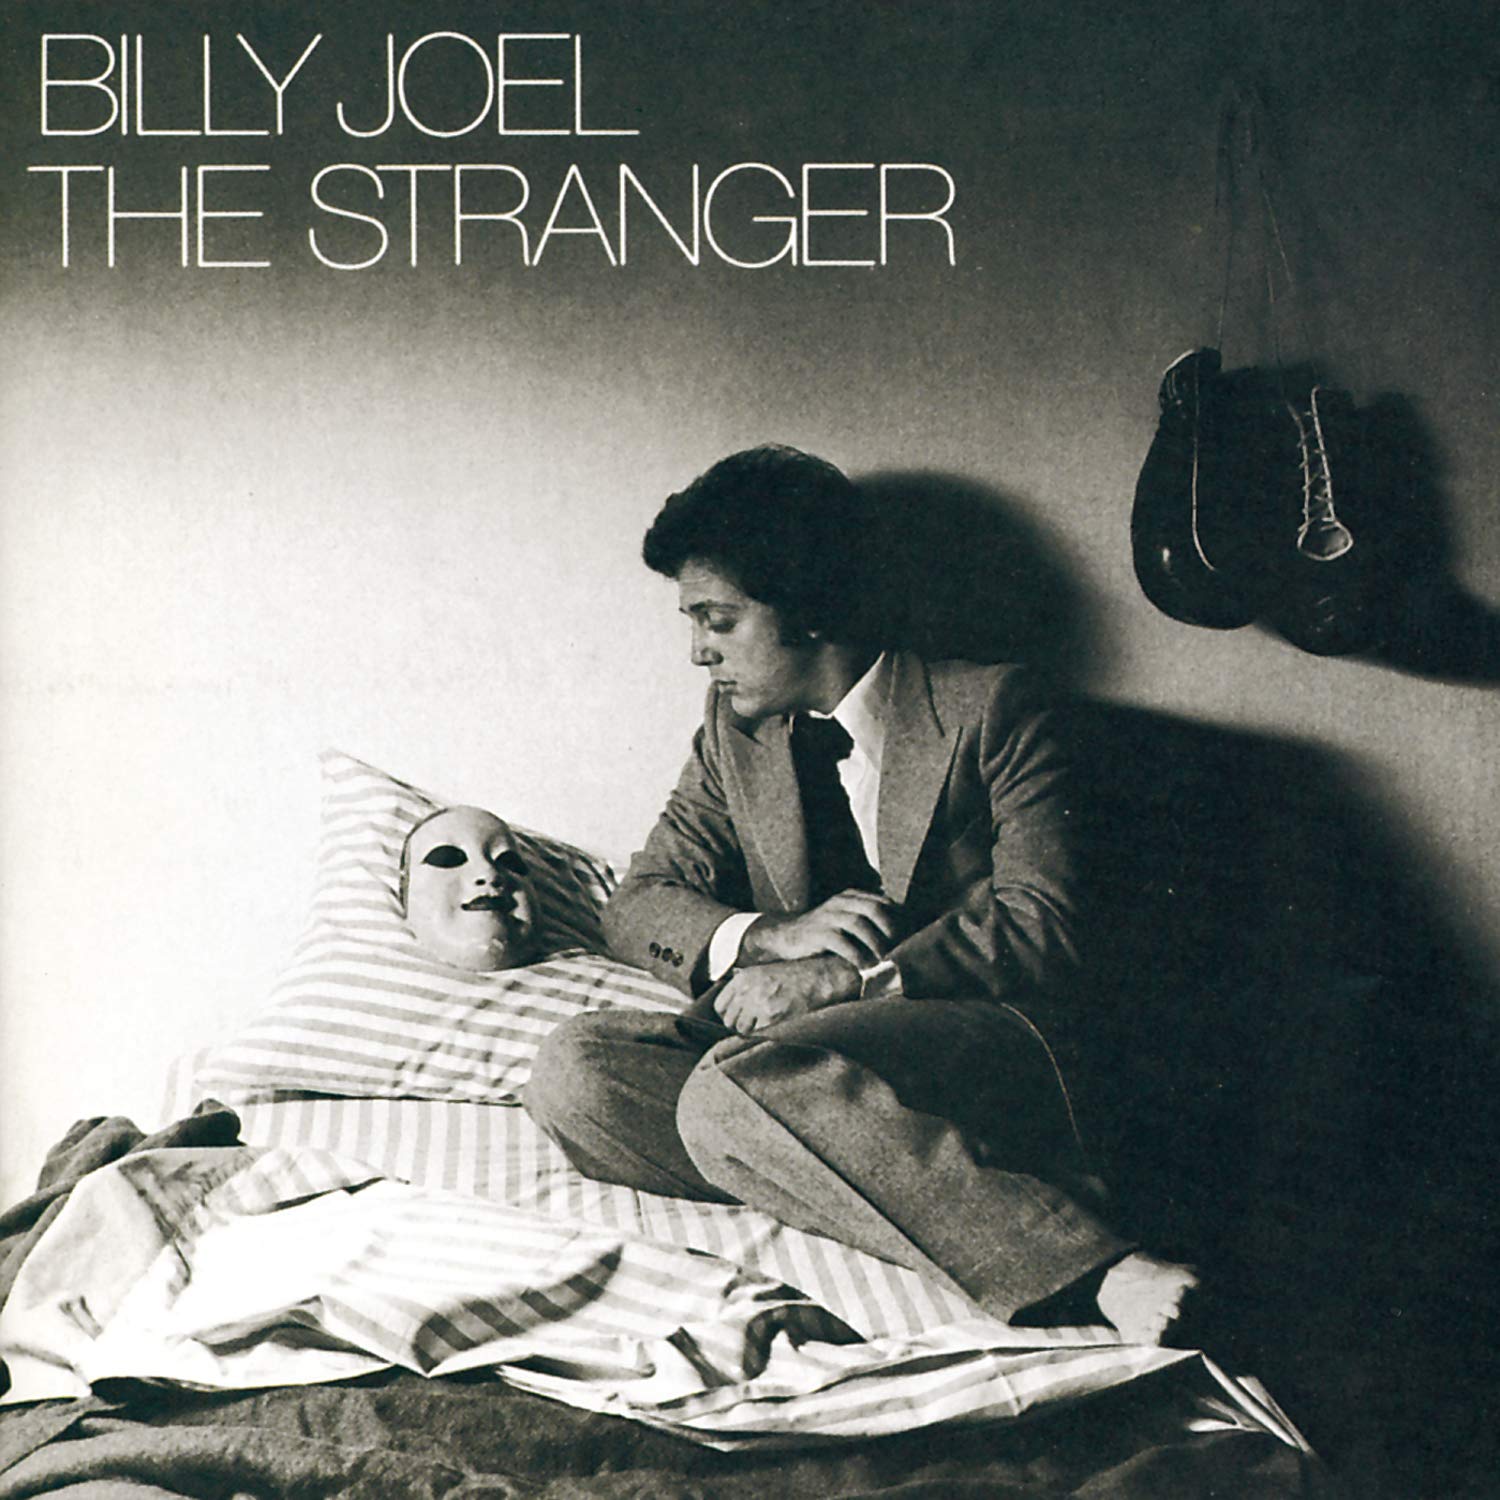 Happy 75th, Billy Joel